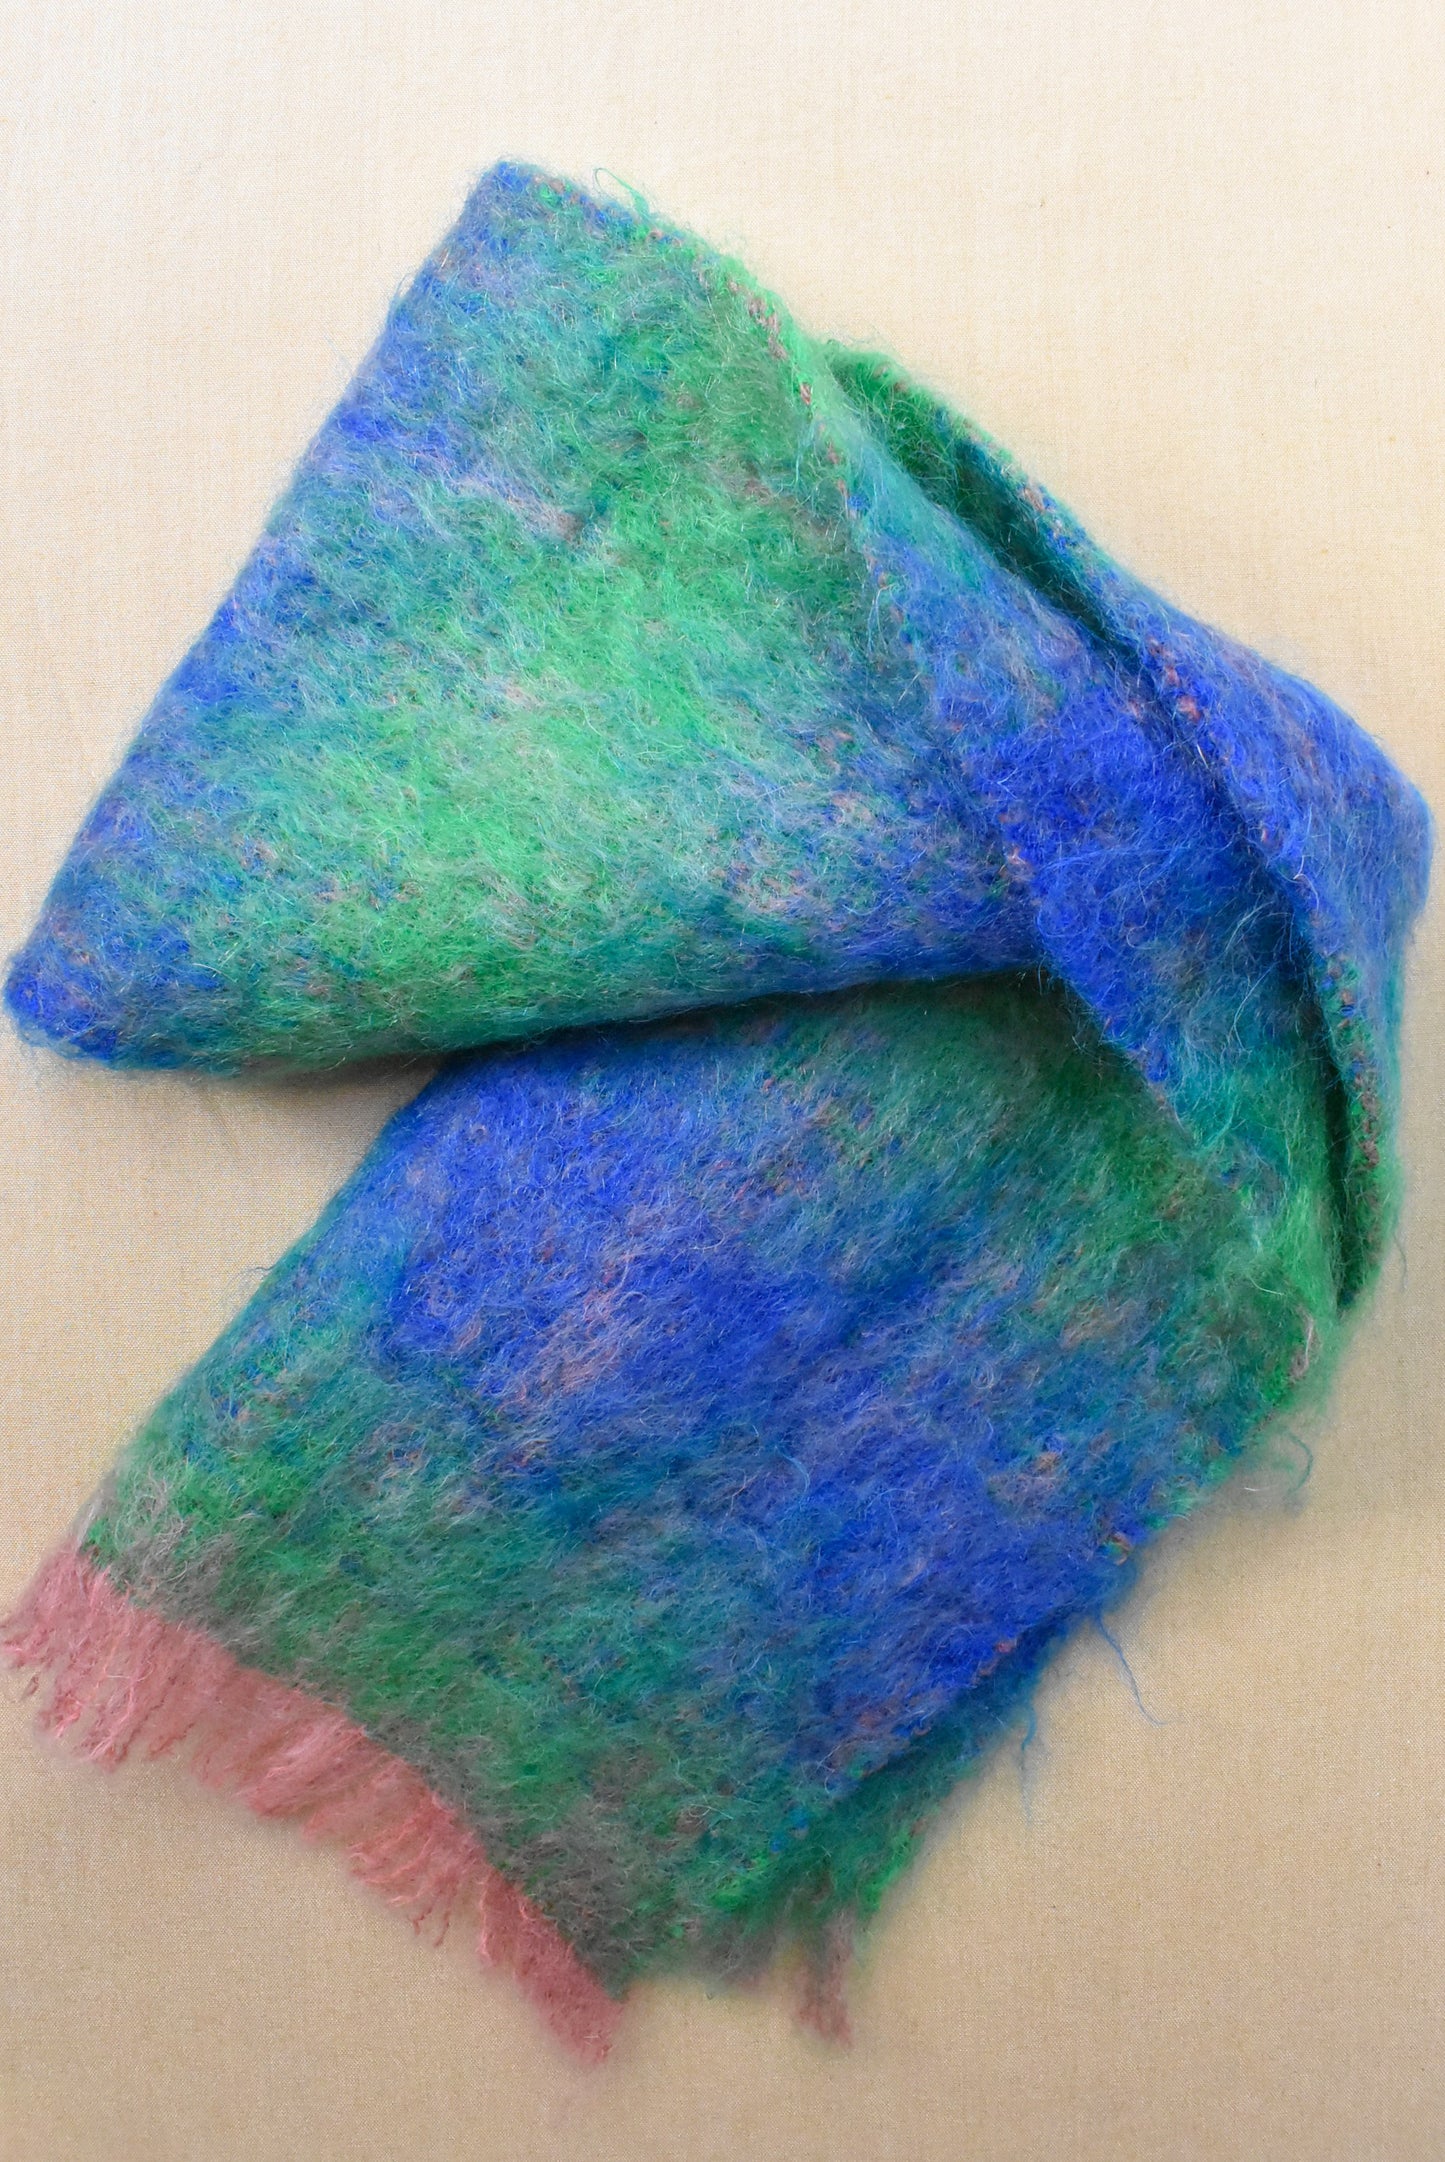 Craig-Na-Creidhe mohair wool scarf